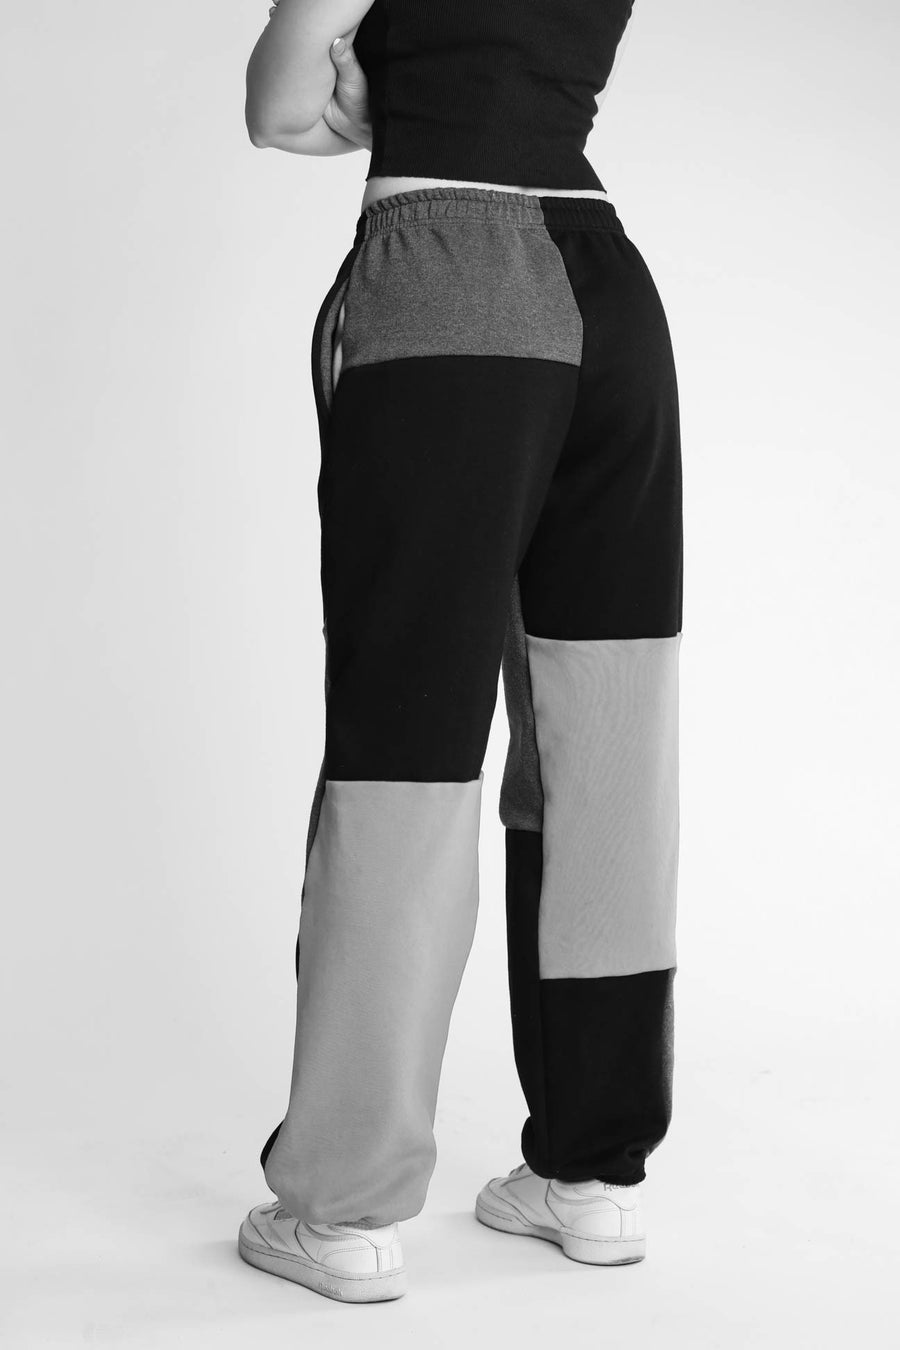 Unisex Rework Nike Patchwork Sweatpants - M